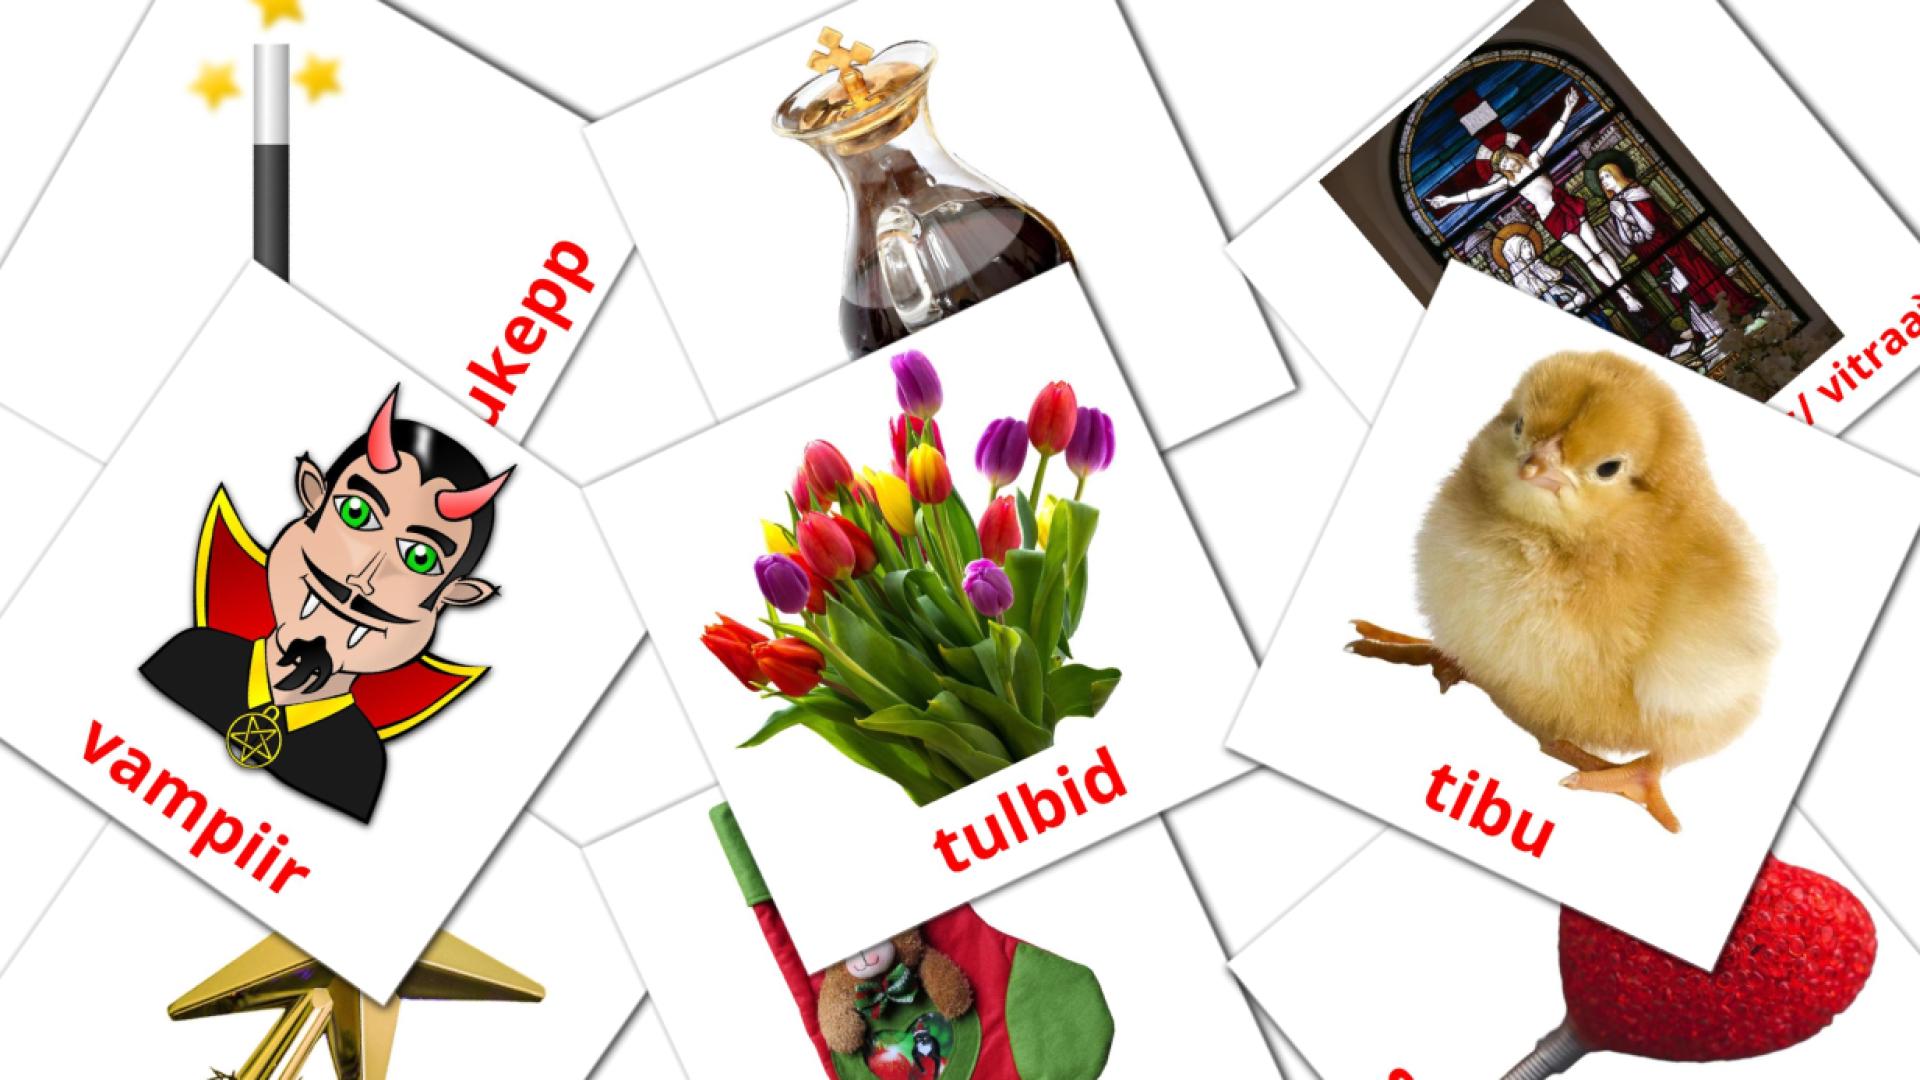 pühad estonian vocabulary flashcards